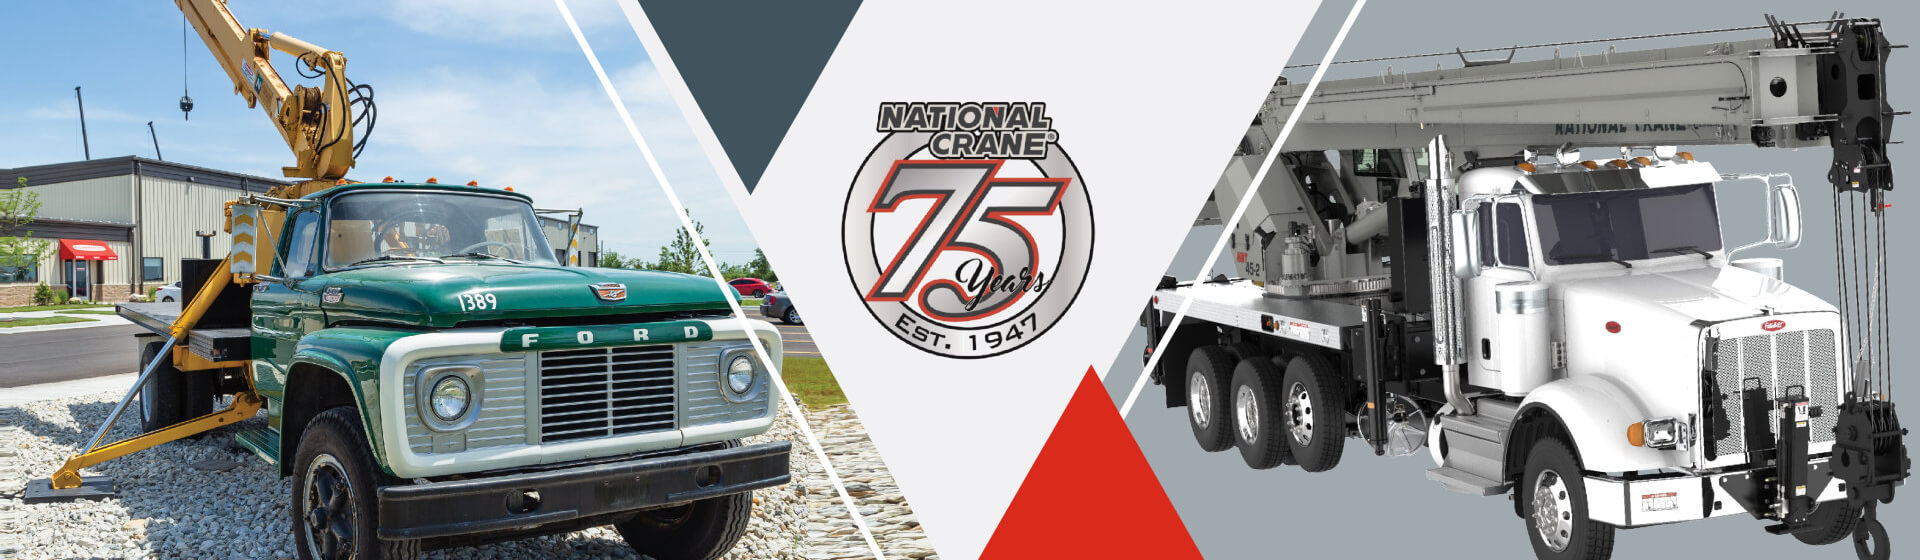 Celebrating-success-National-Crane-marks-its-75th-anniversary4.jpg